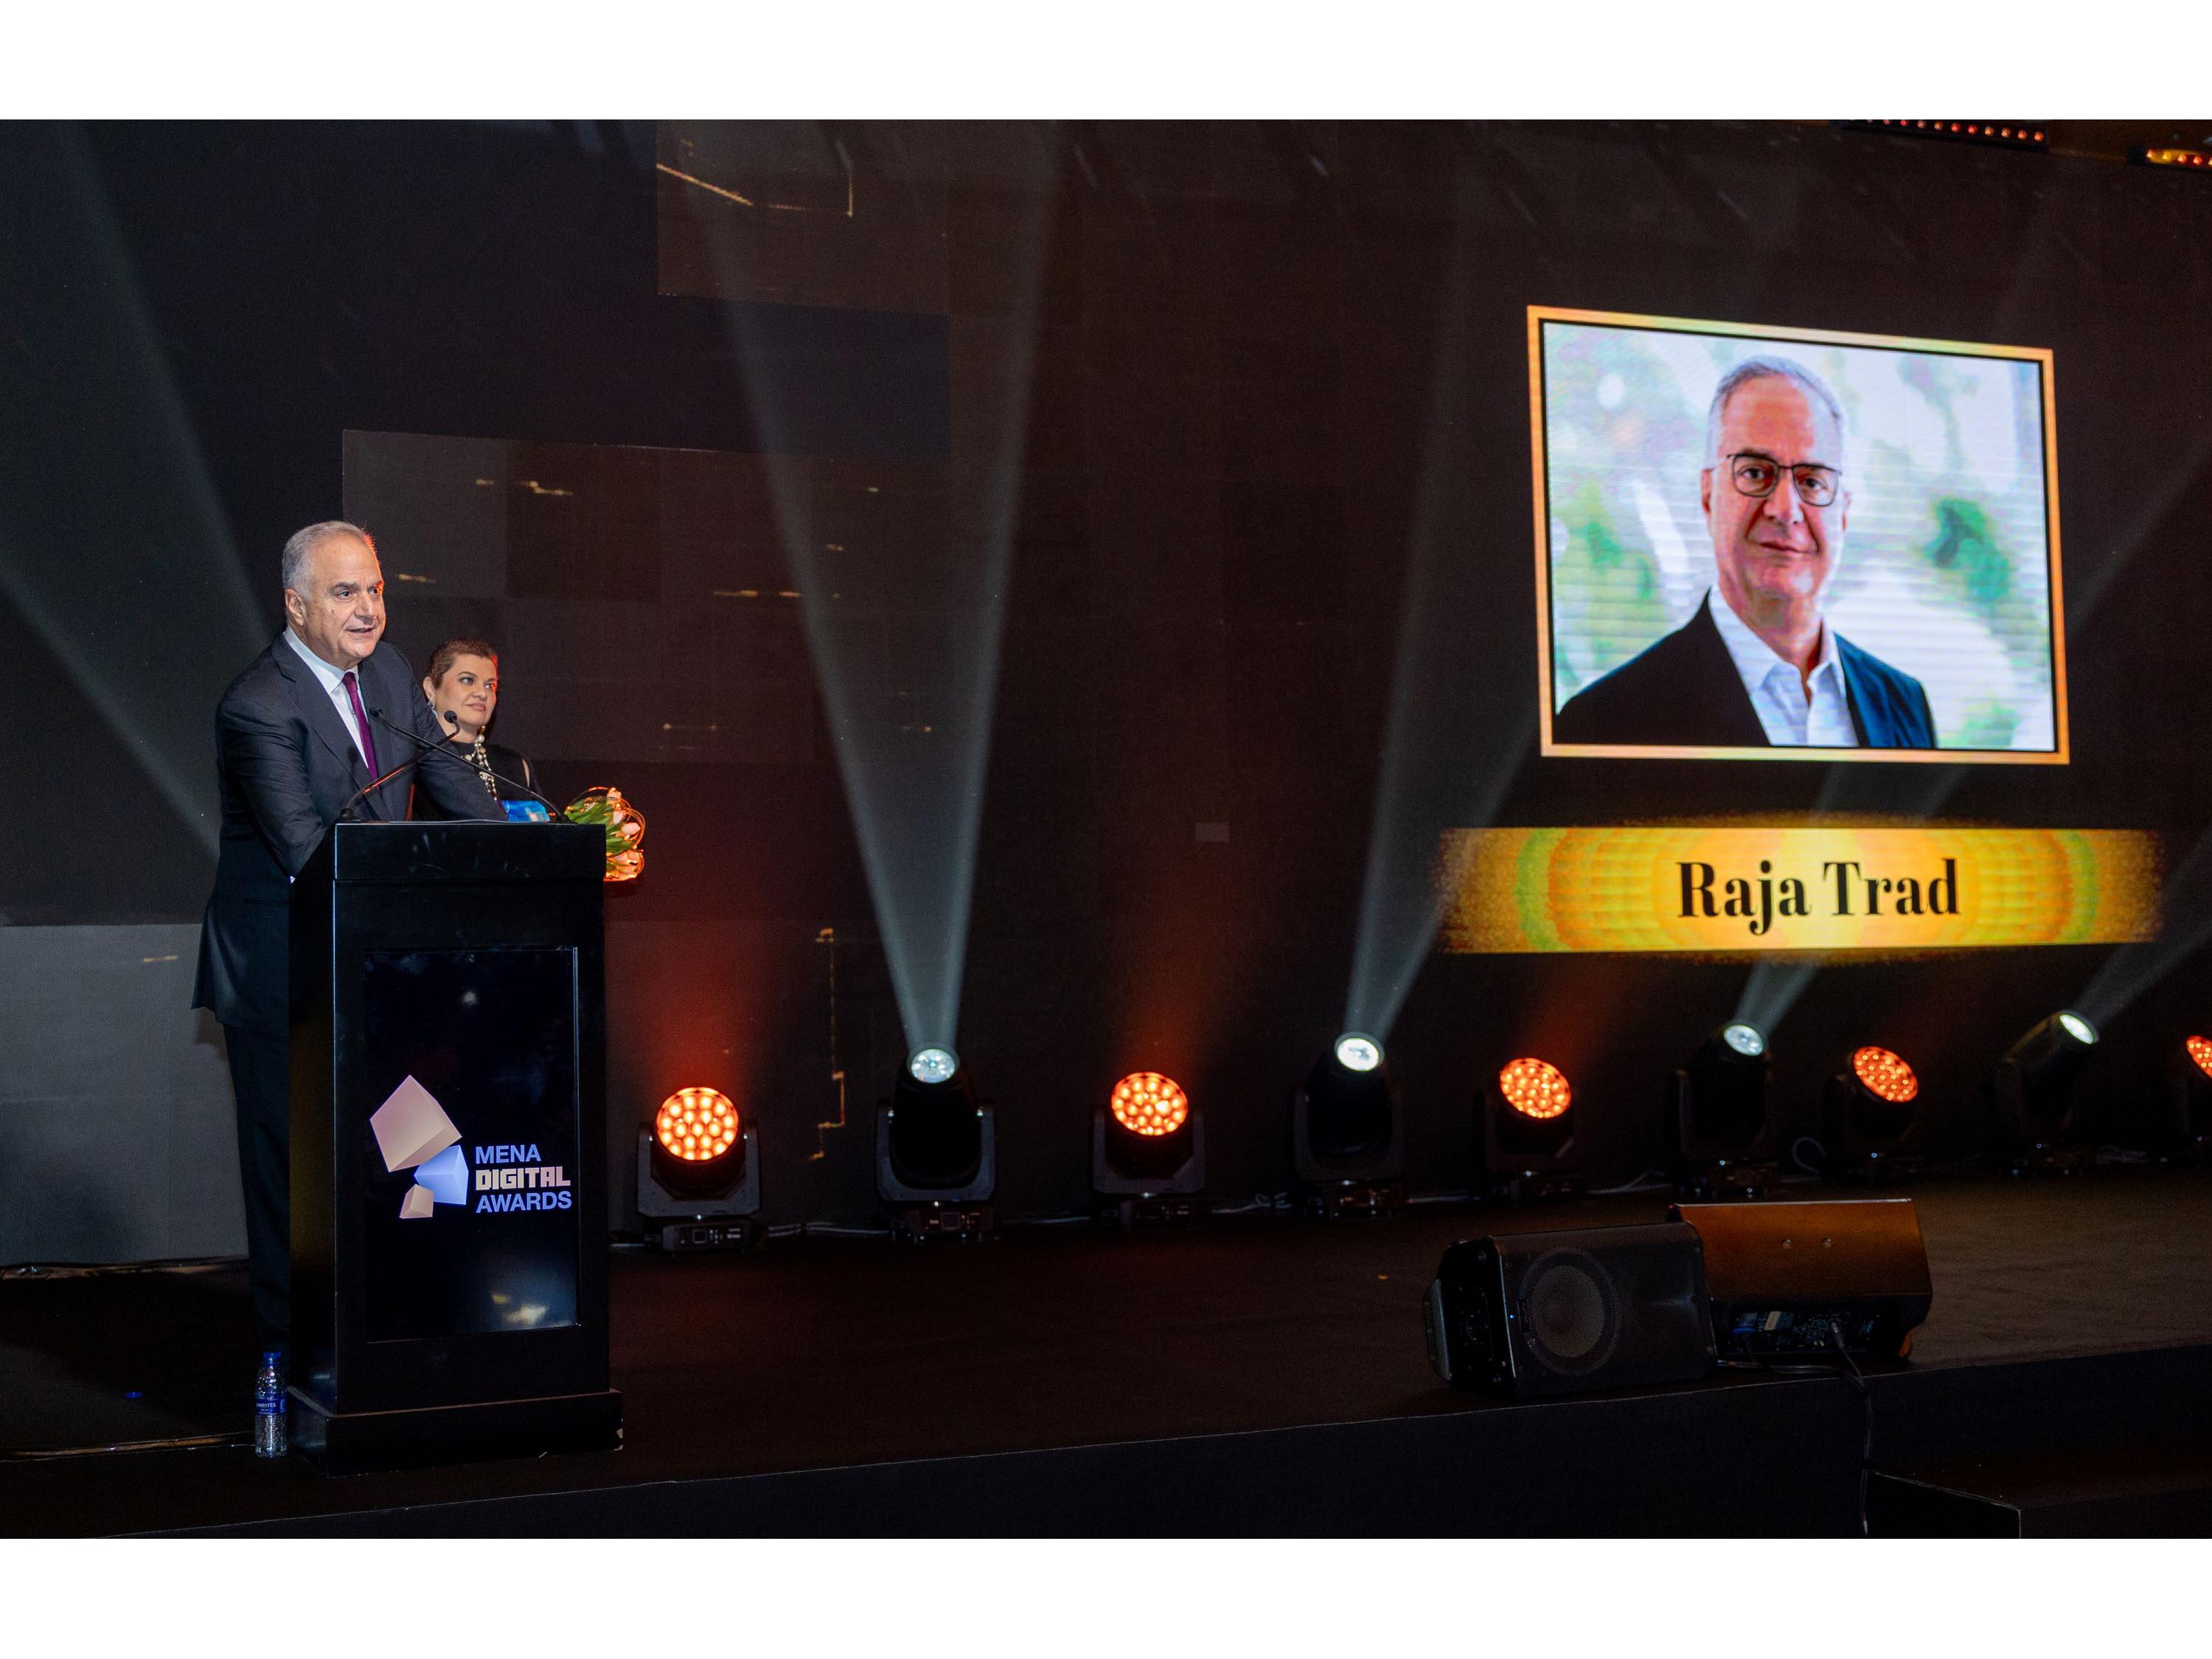 MENA Digital Awards hands Raja Trad the 'Life Achievement Award'